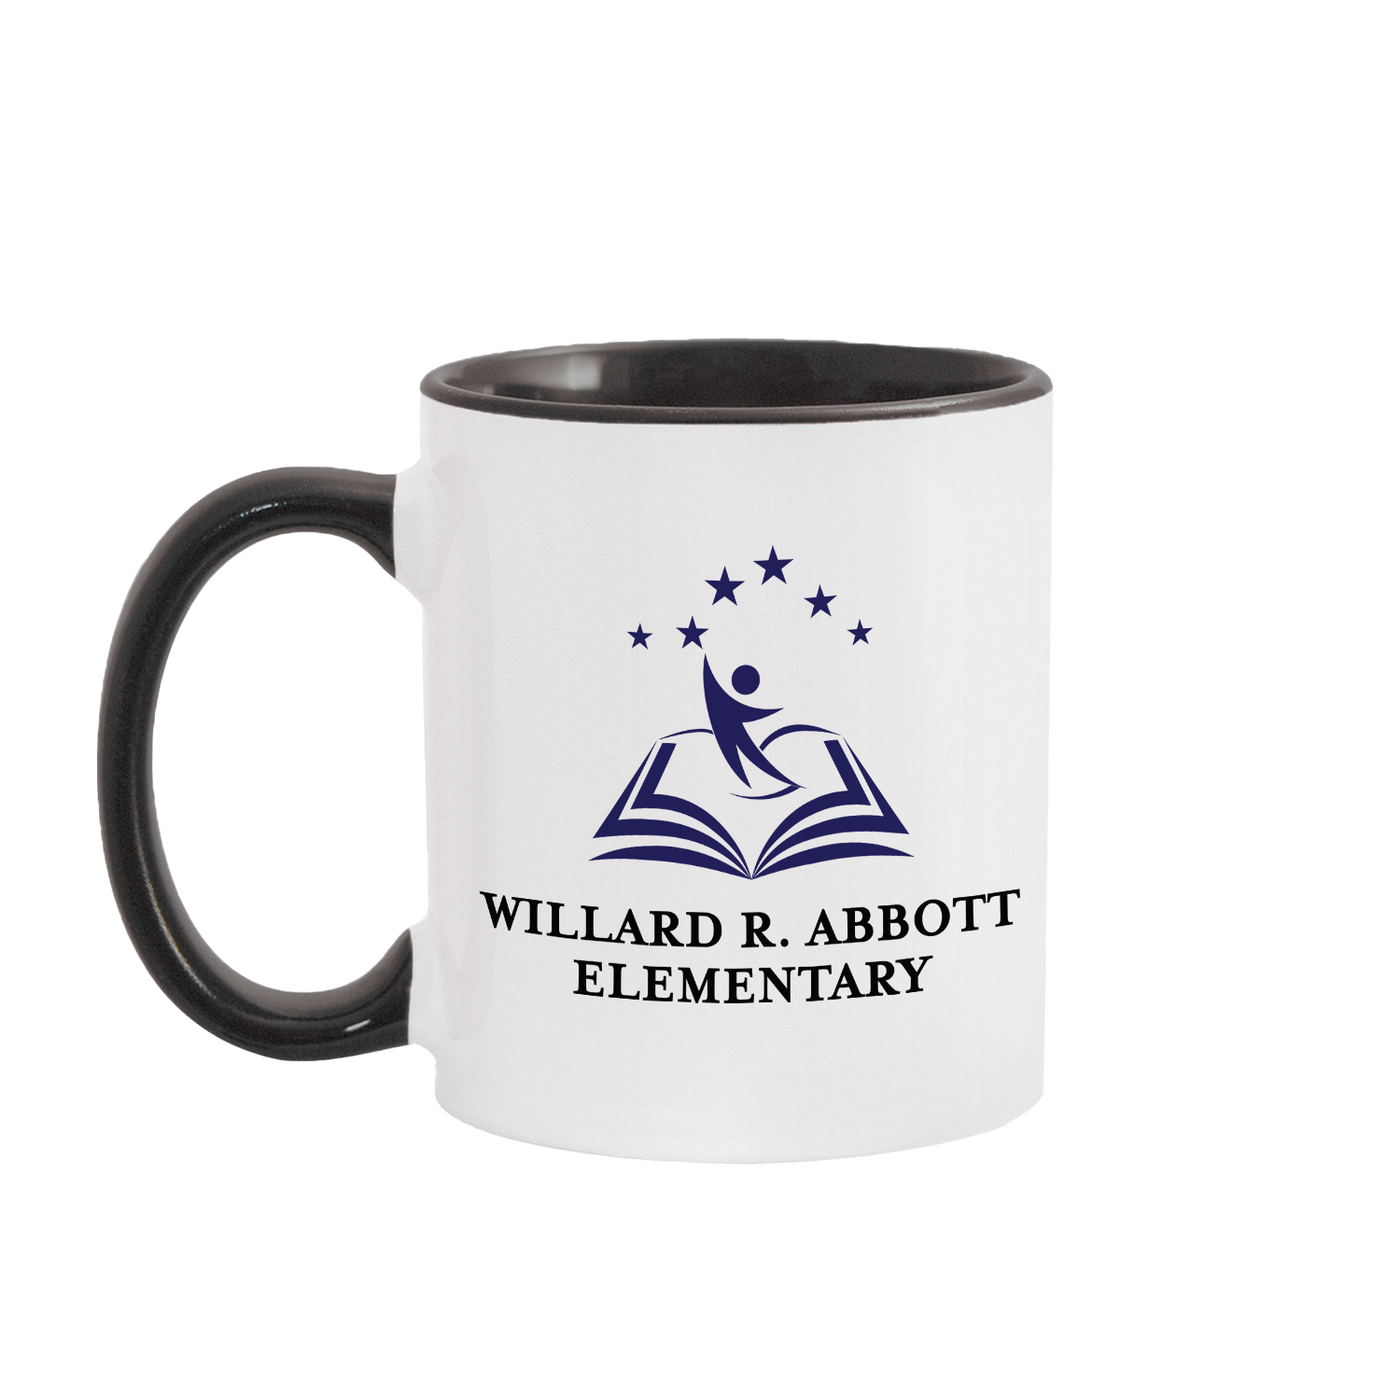 Abbott Elementary Willard R. Elementary Two-Tone Mug